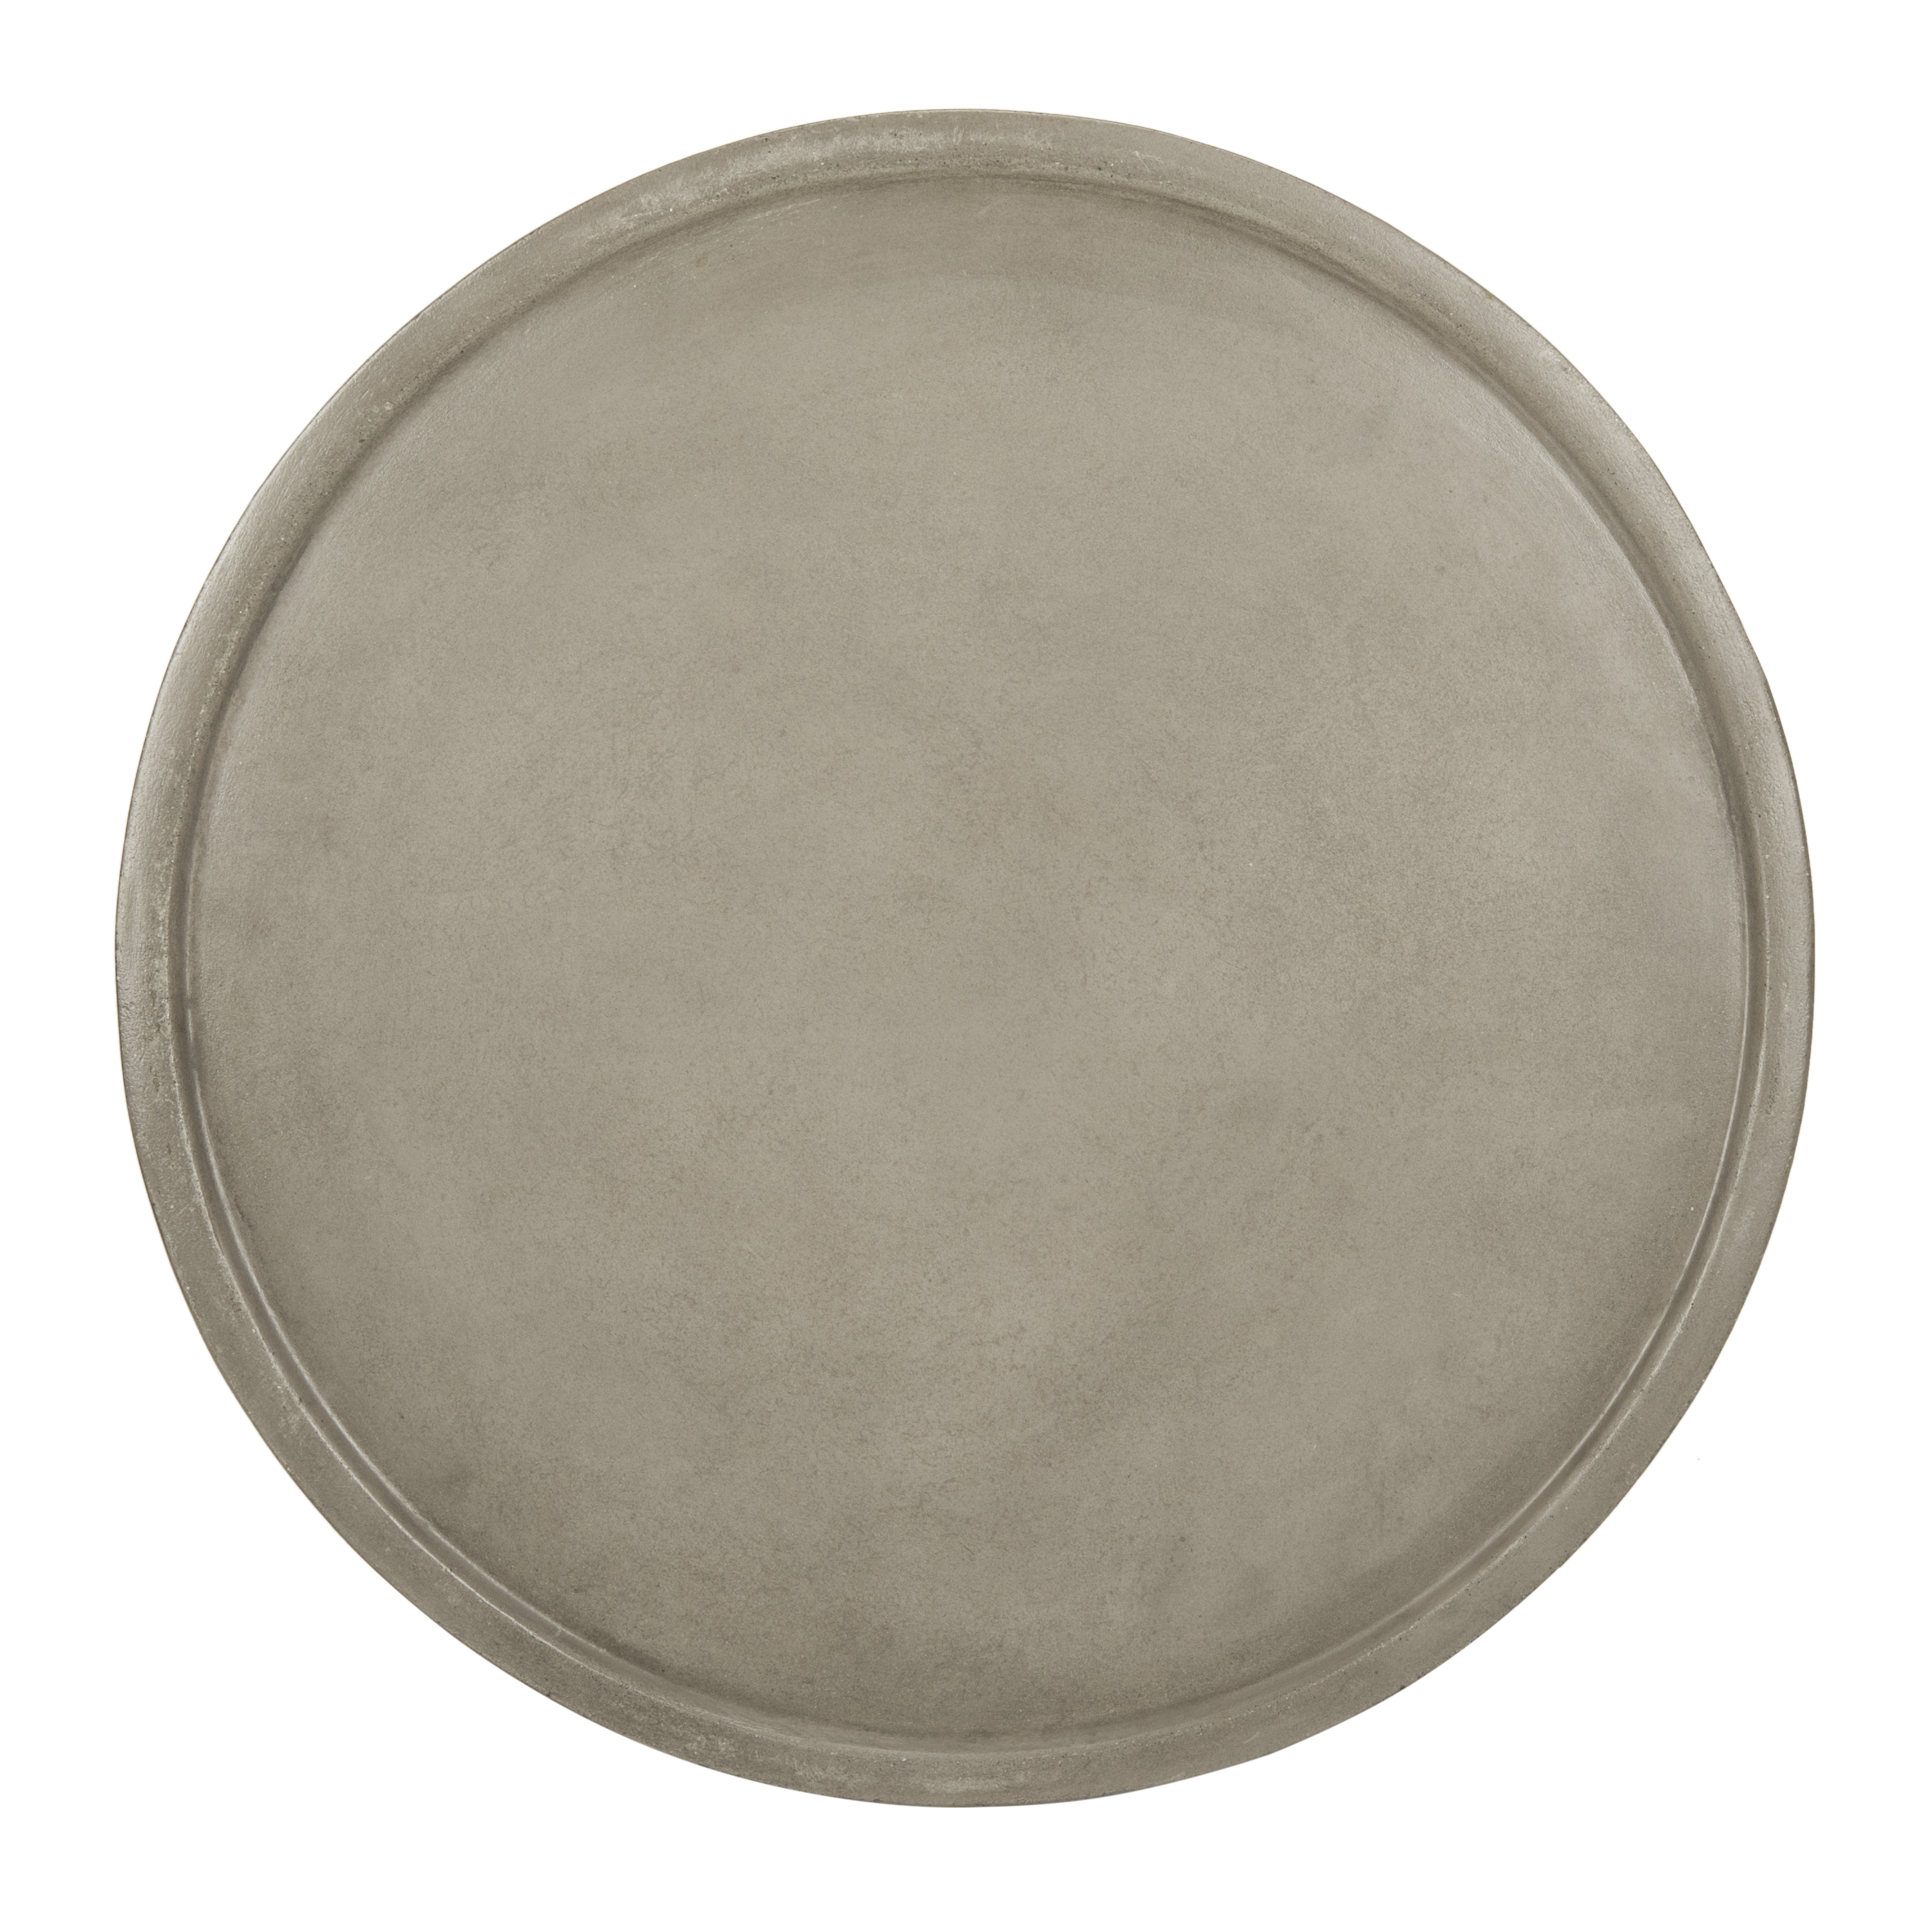 Farmond Concrete Side Table, Gray - Image 4